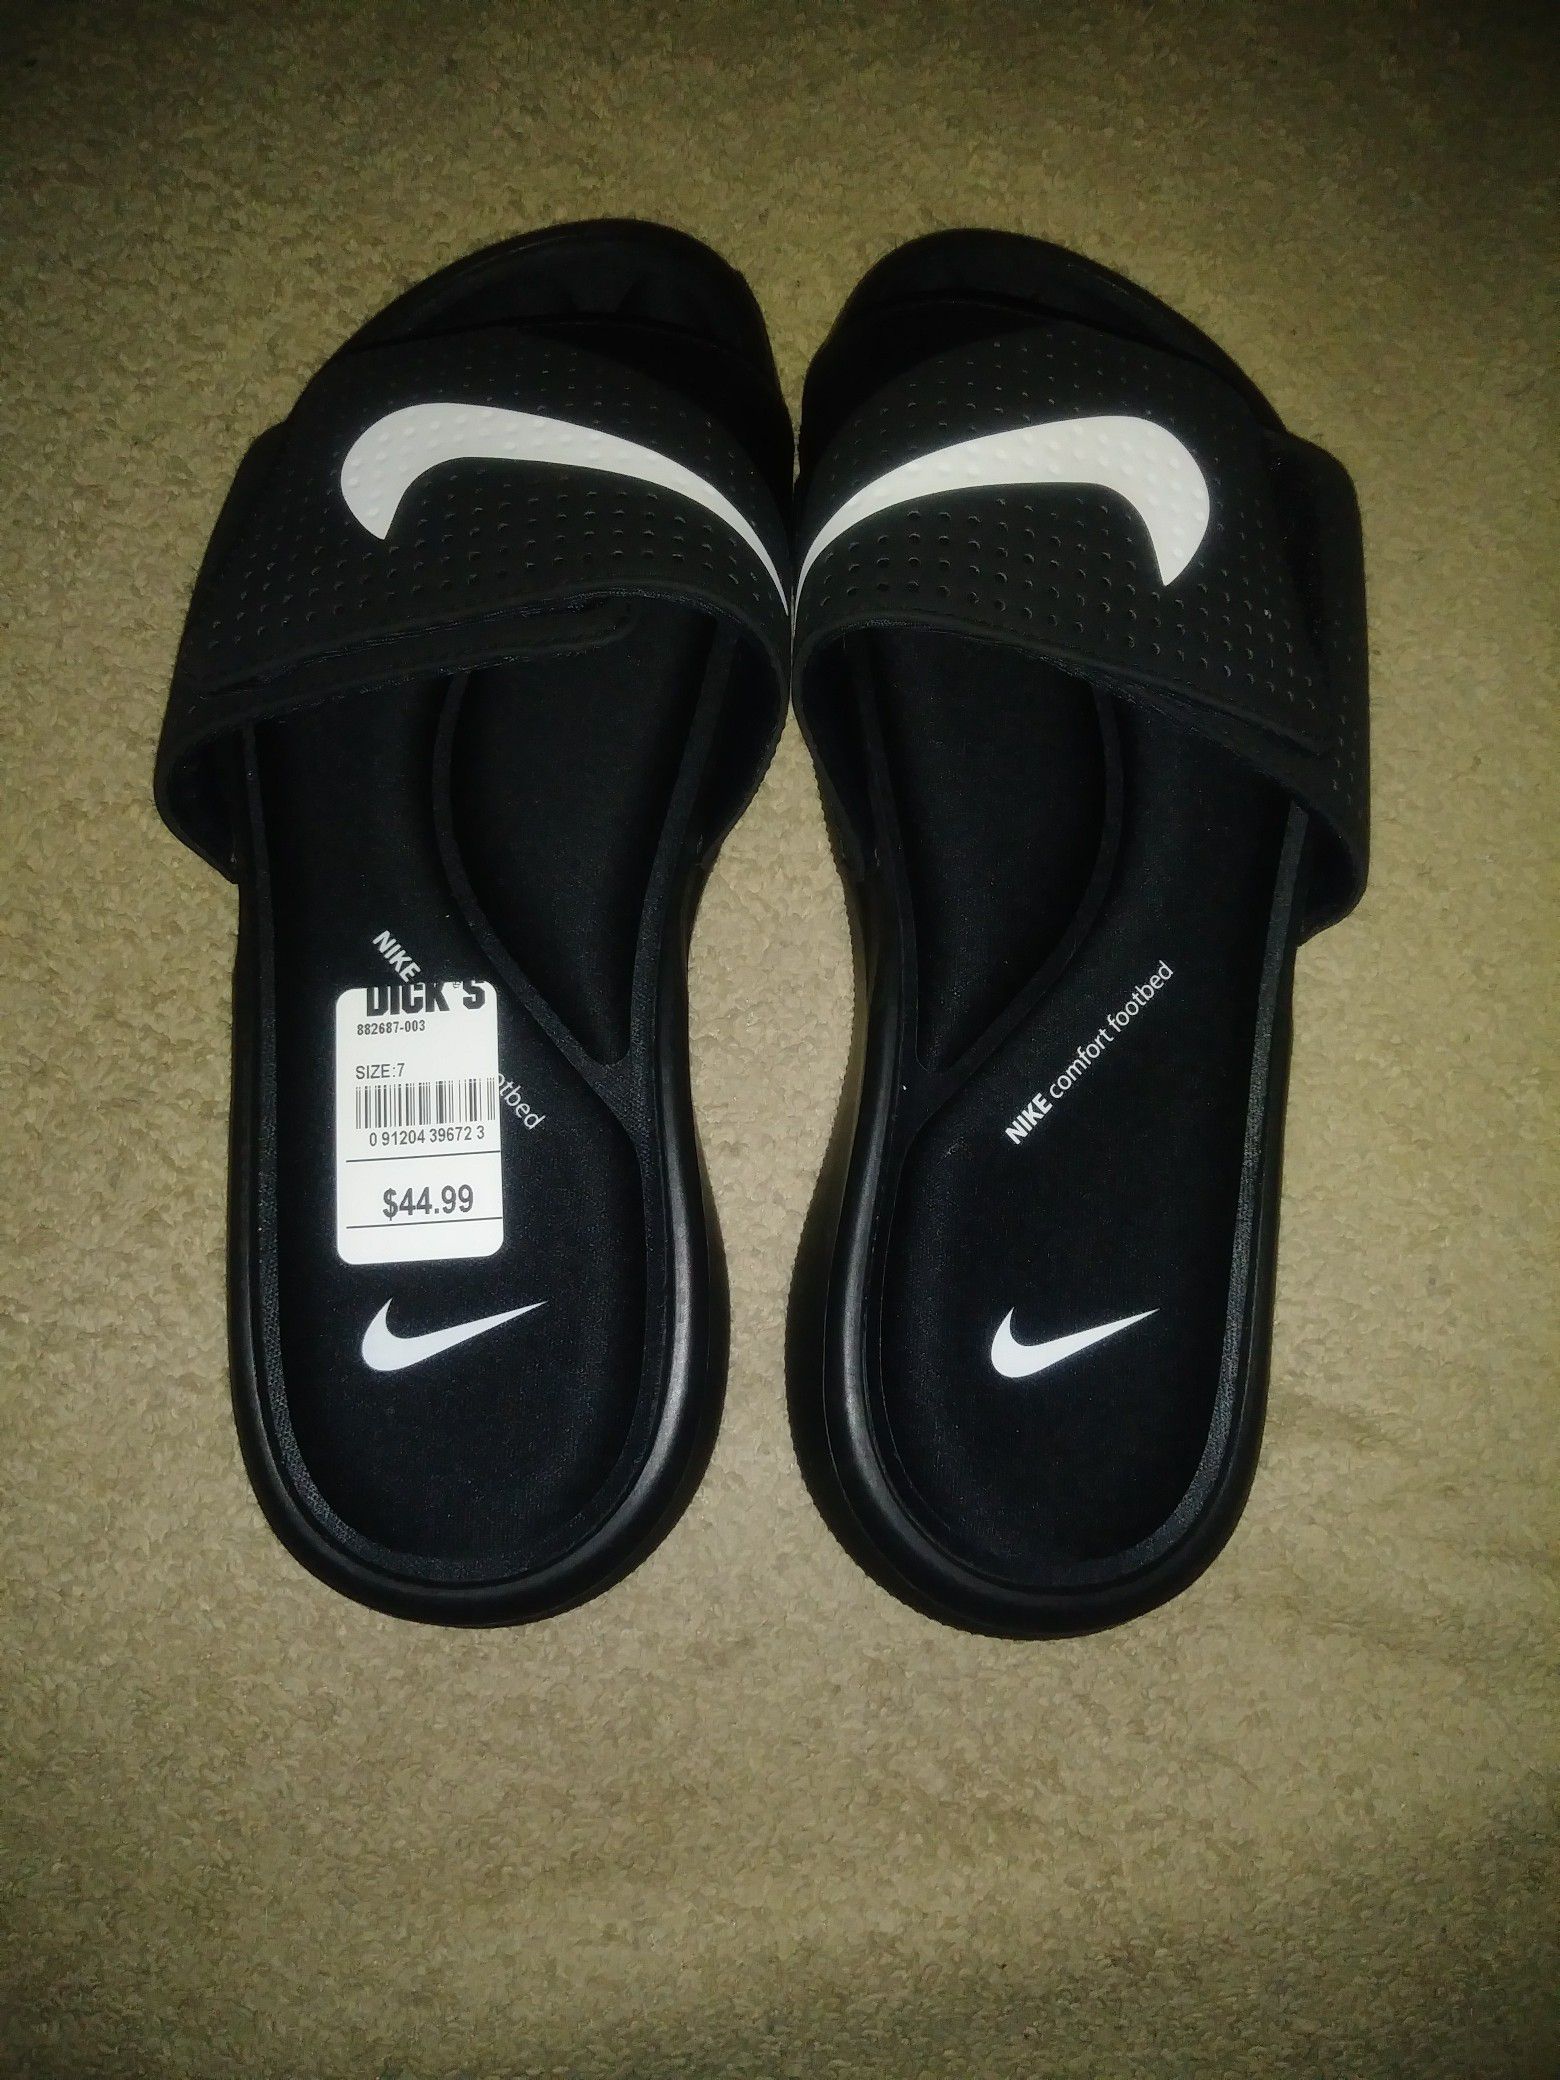 Nike Ultra Comfort Sandals Black/White/Black : 7.5 - Medium (100) for Sale in Mesquite, TX - OfferUp